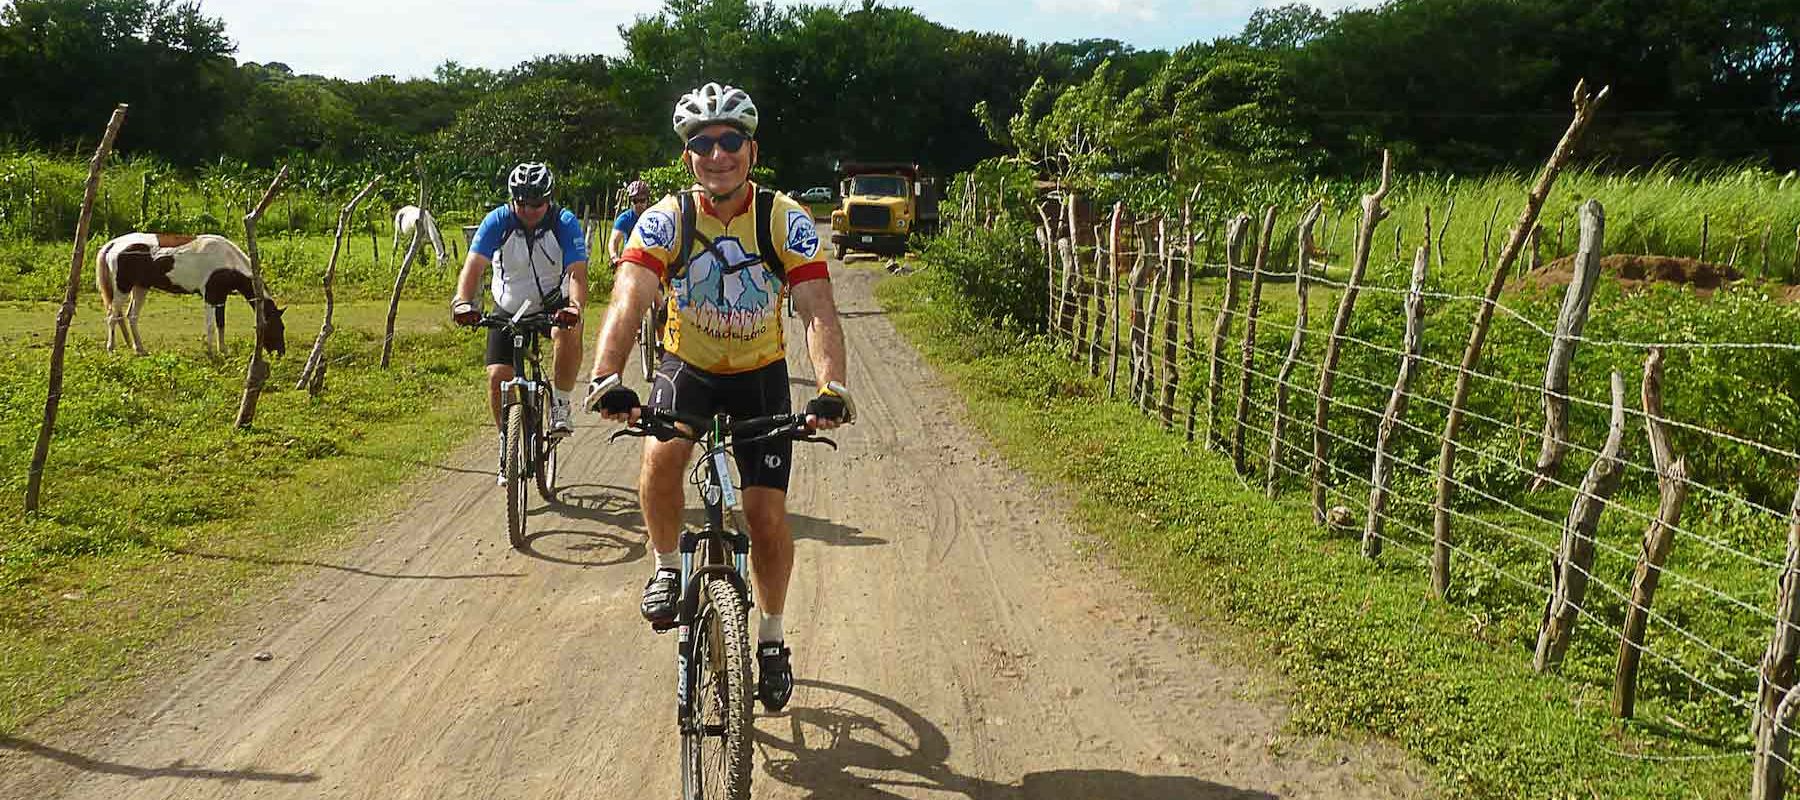 Group Trips biking through Nicaragua